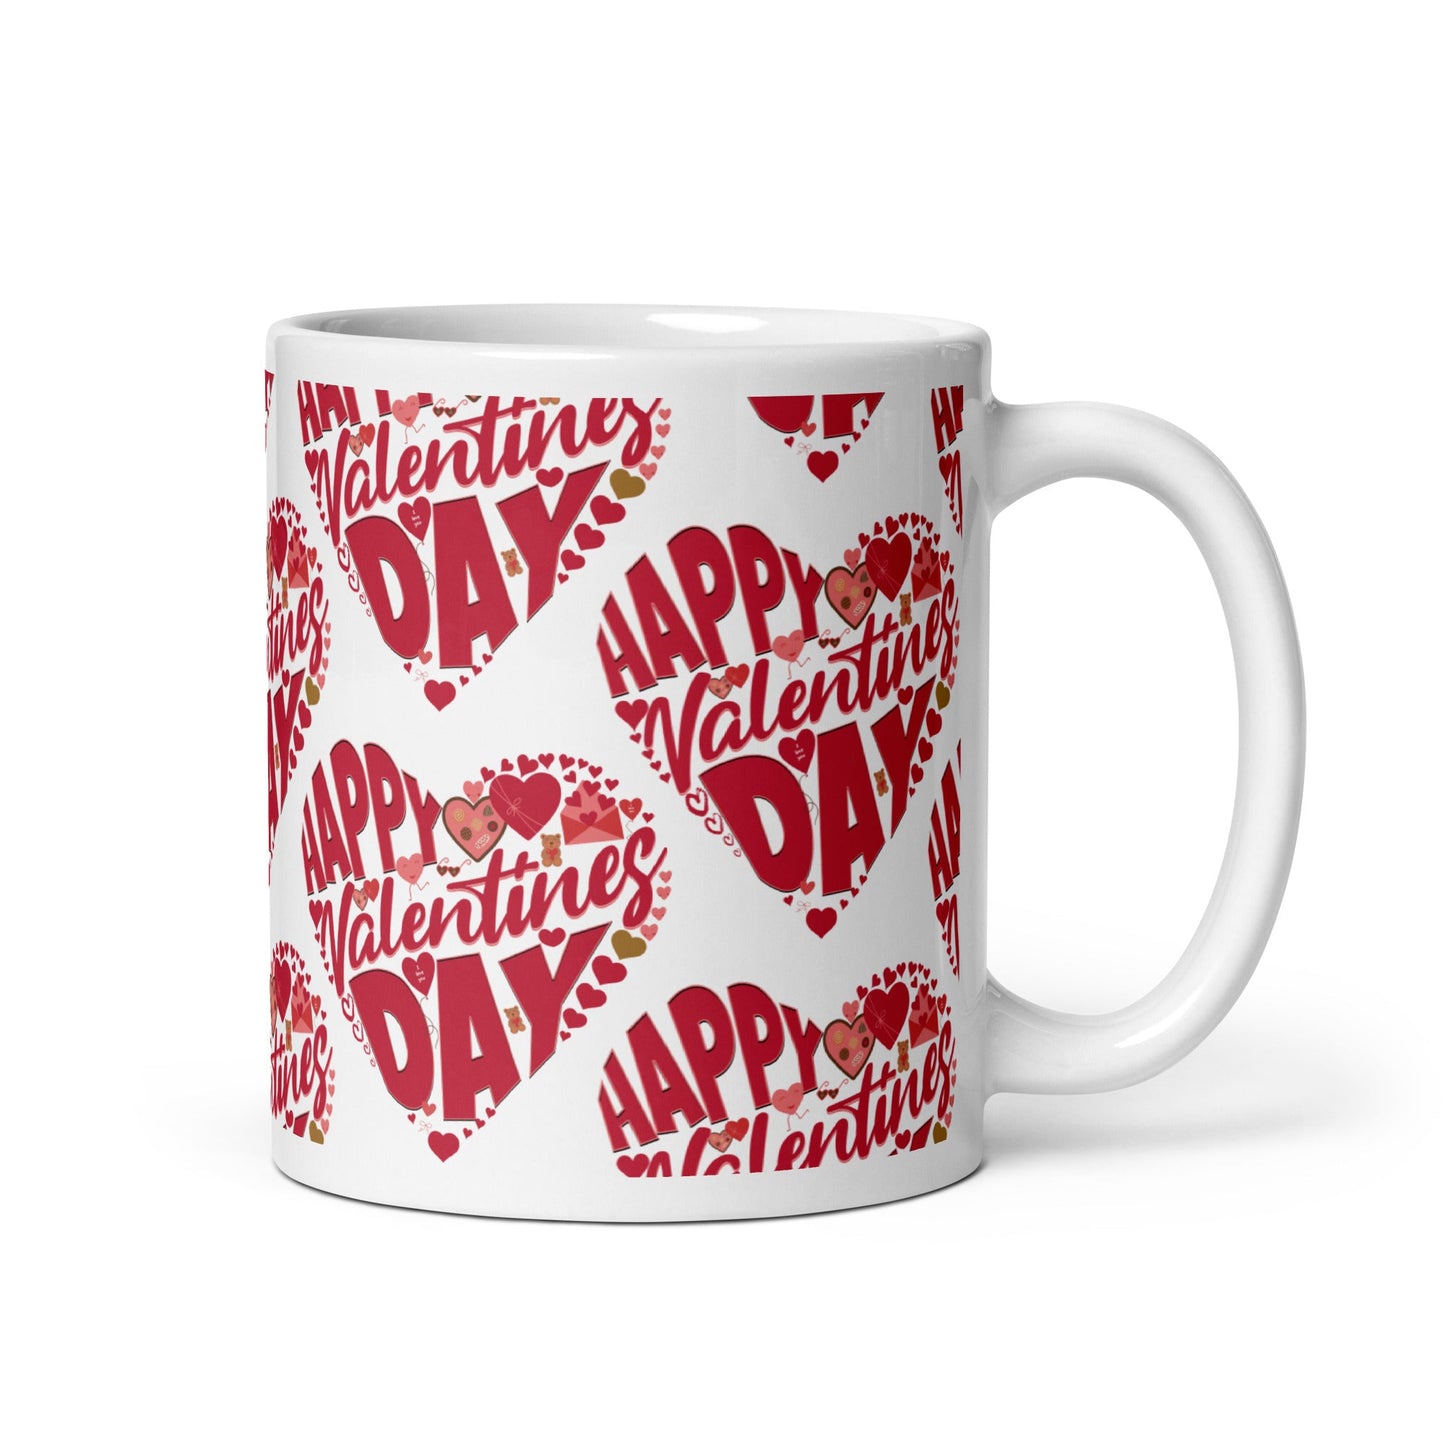 Happy Valentine's Day - White glossy mug - Premium  from T&L Kustoms - Just $12.95! Shop now at T&L Kustoms